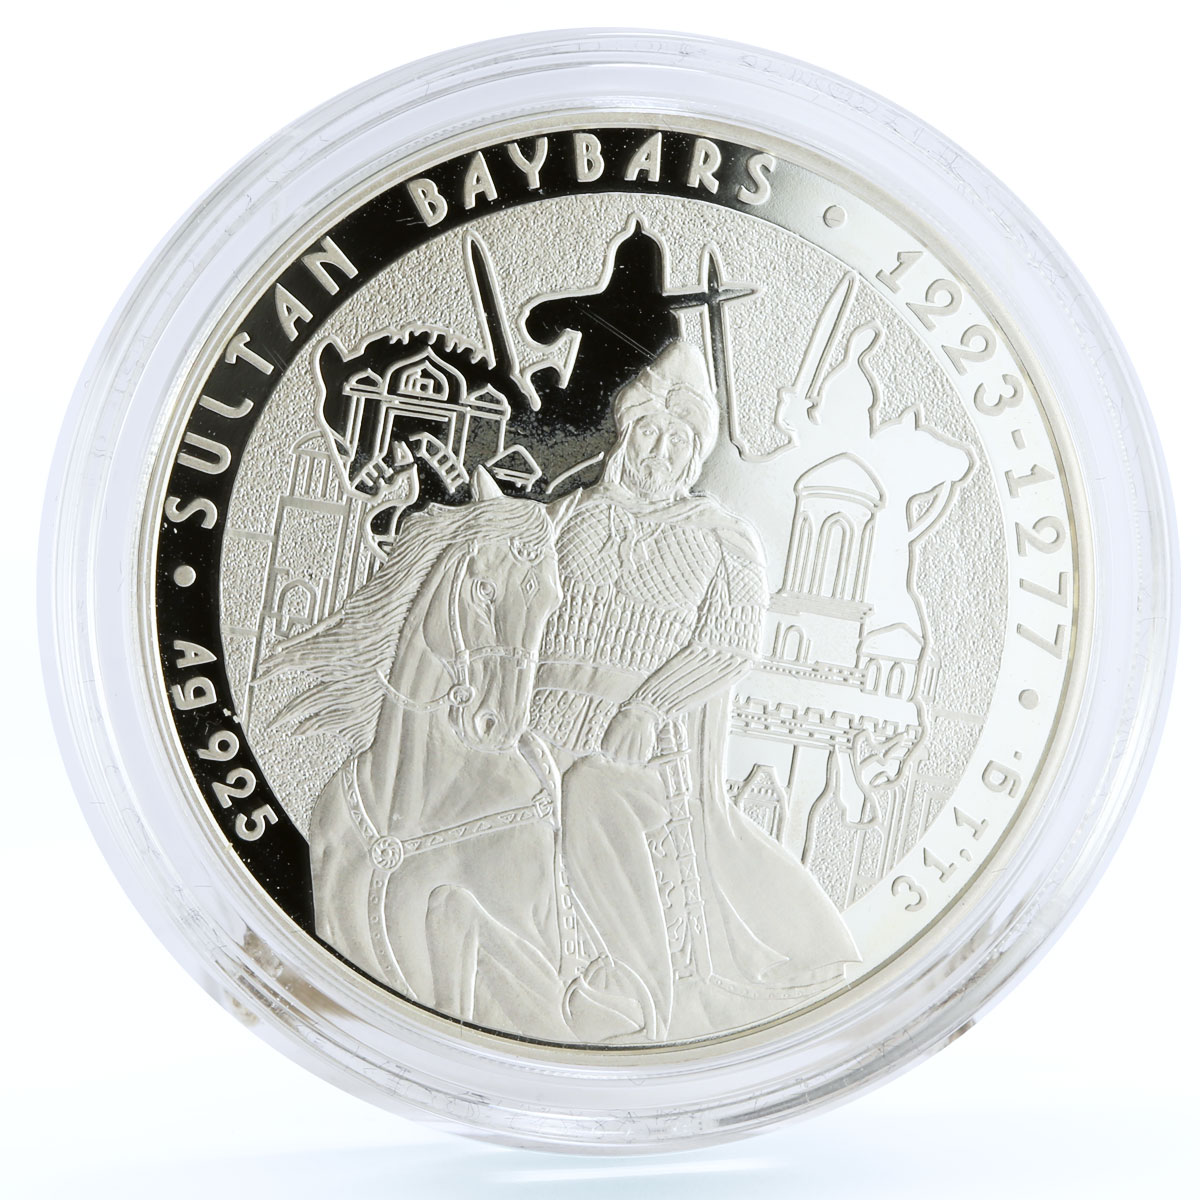 Kazakhstan 100 tenge Great Commanders Sultan Baybars Horseman silver coin 2012